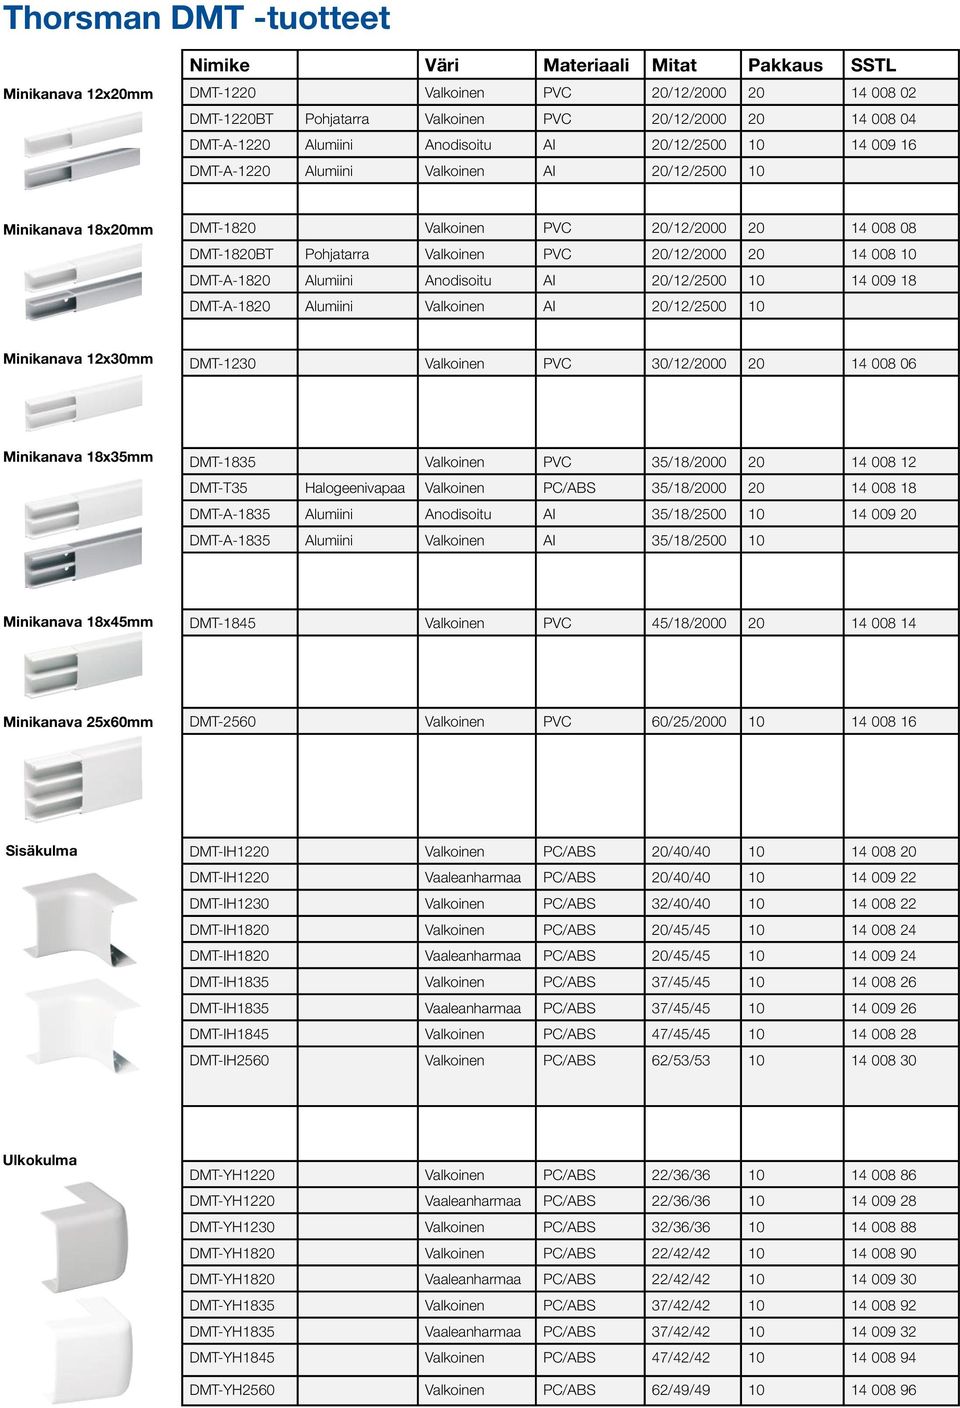 Valkoinen PVC 20/12/2000 20 14 008 10 DMT-A-1820 Alumiini Anodisoitu AI 20/12/2500 10 14 009 18 DMT-A-1820 Alumiini Valkoinen AI 20/12/2500 10 Minikanava 12x30mm DMT-1230 Valkoinen PVC 30/12/2000 20